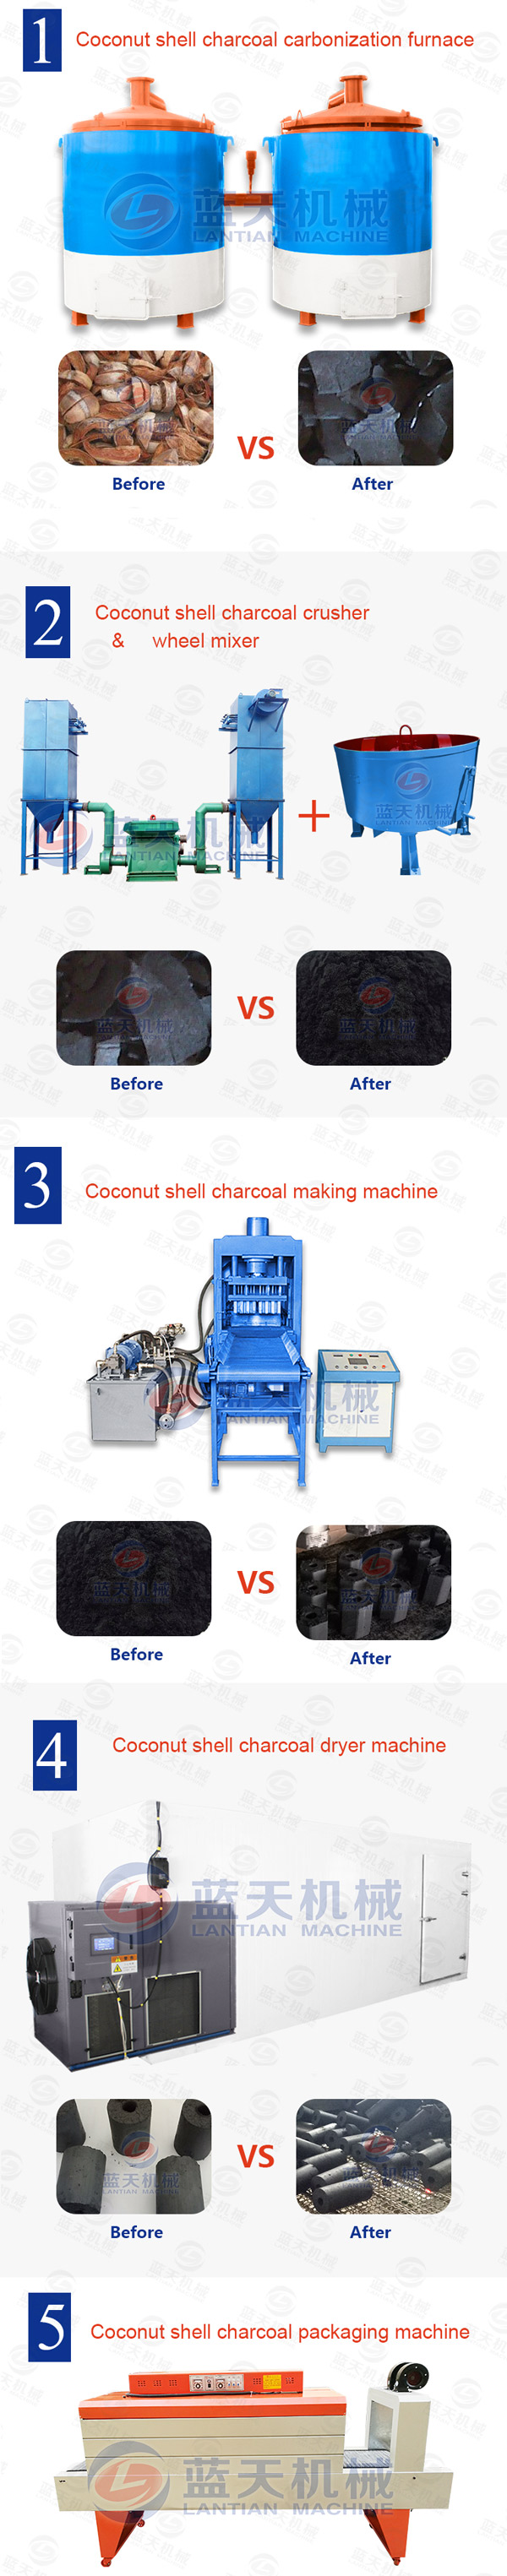 coconut shell charcoal briquettes making machine